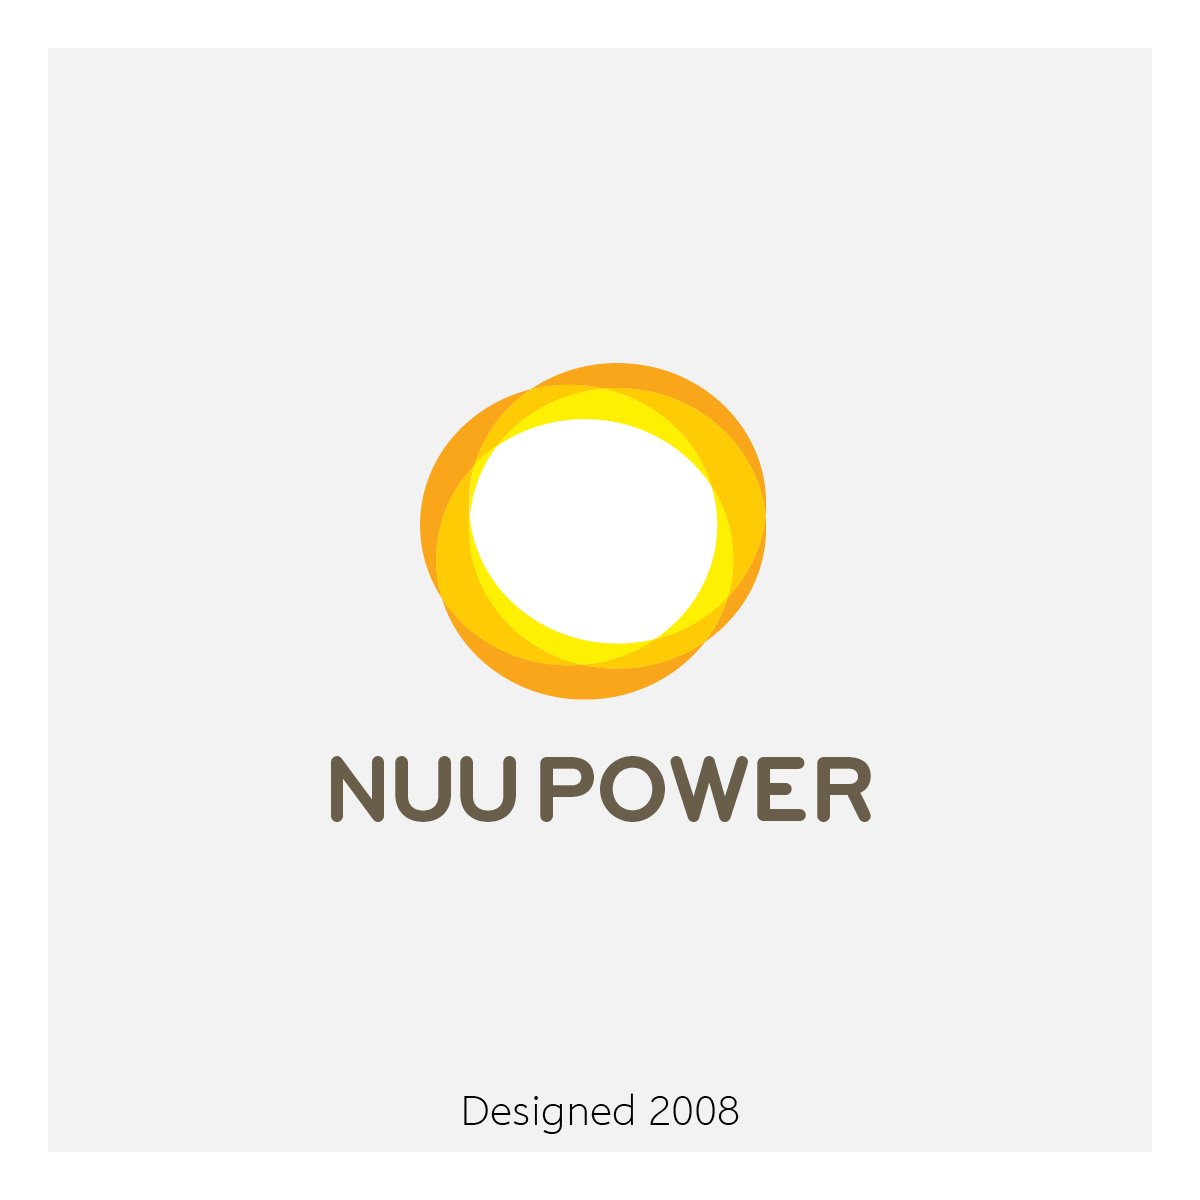 NuuPower Logo Design | Etude Digital